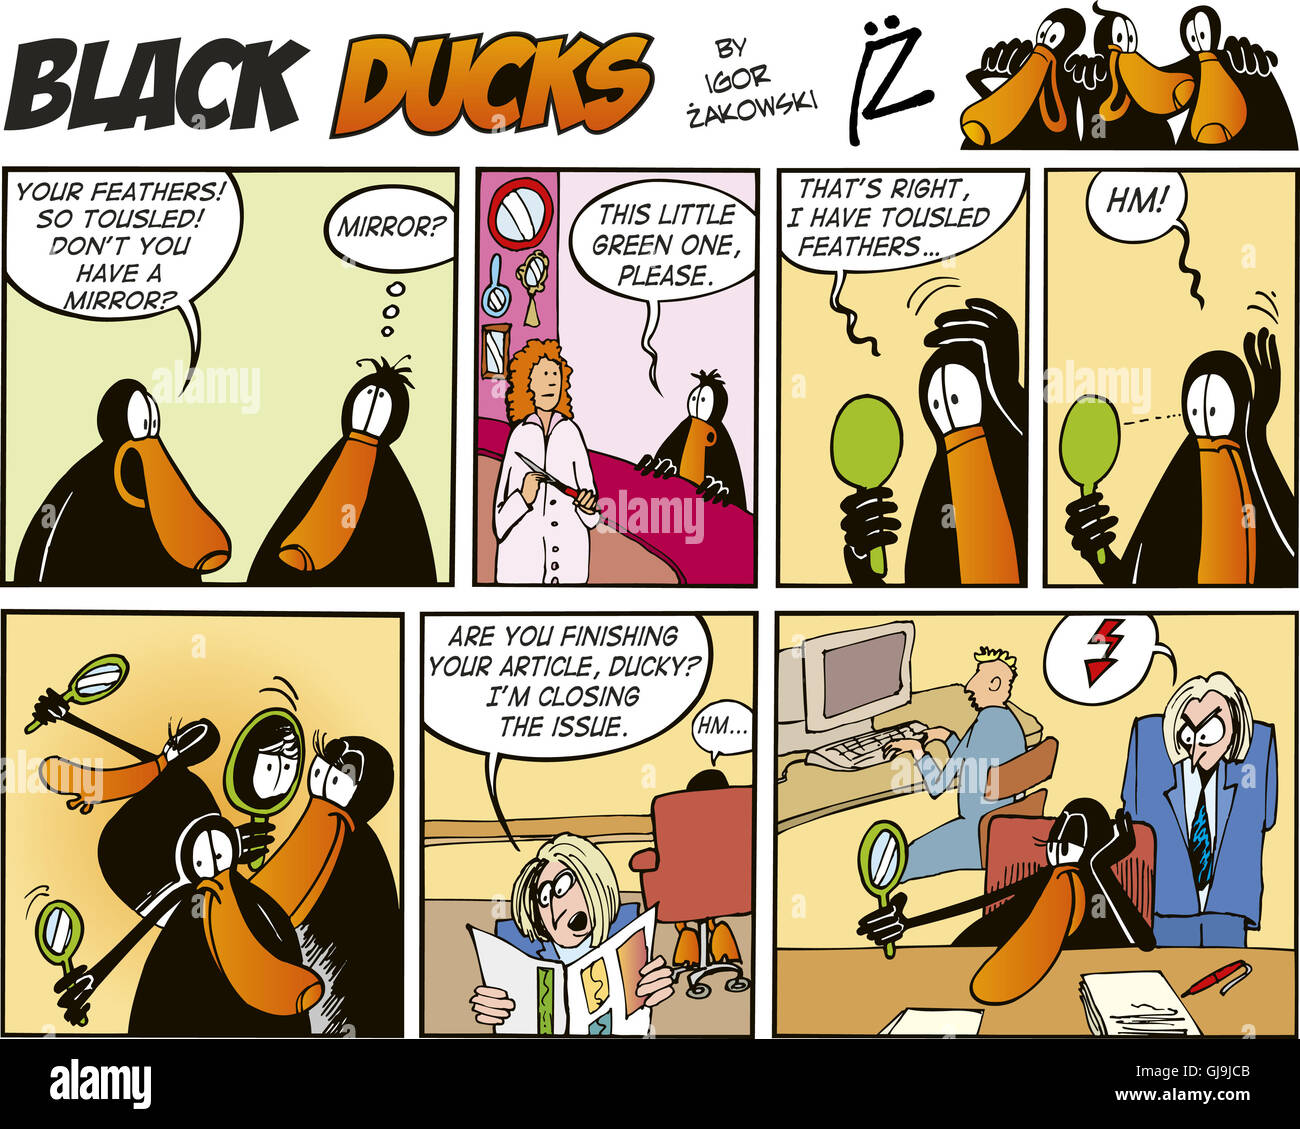 Black Ducks Comics episode 57 Stock Photo